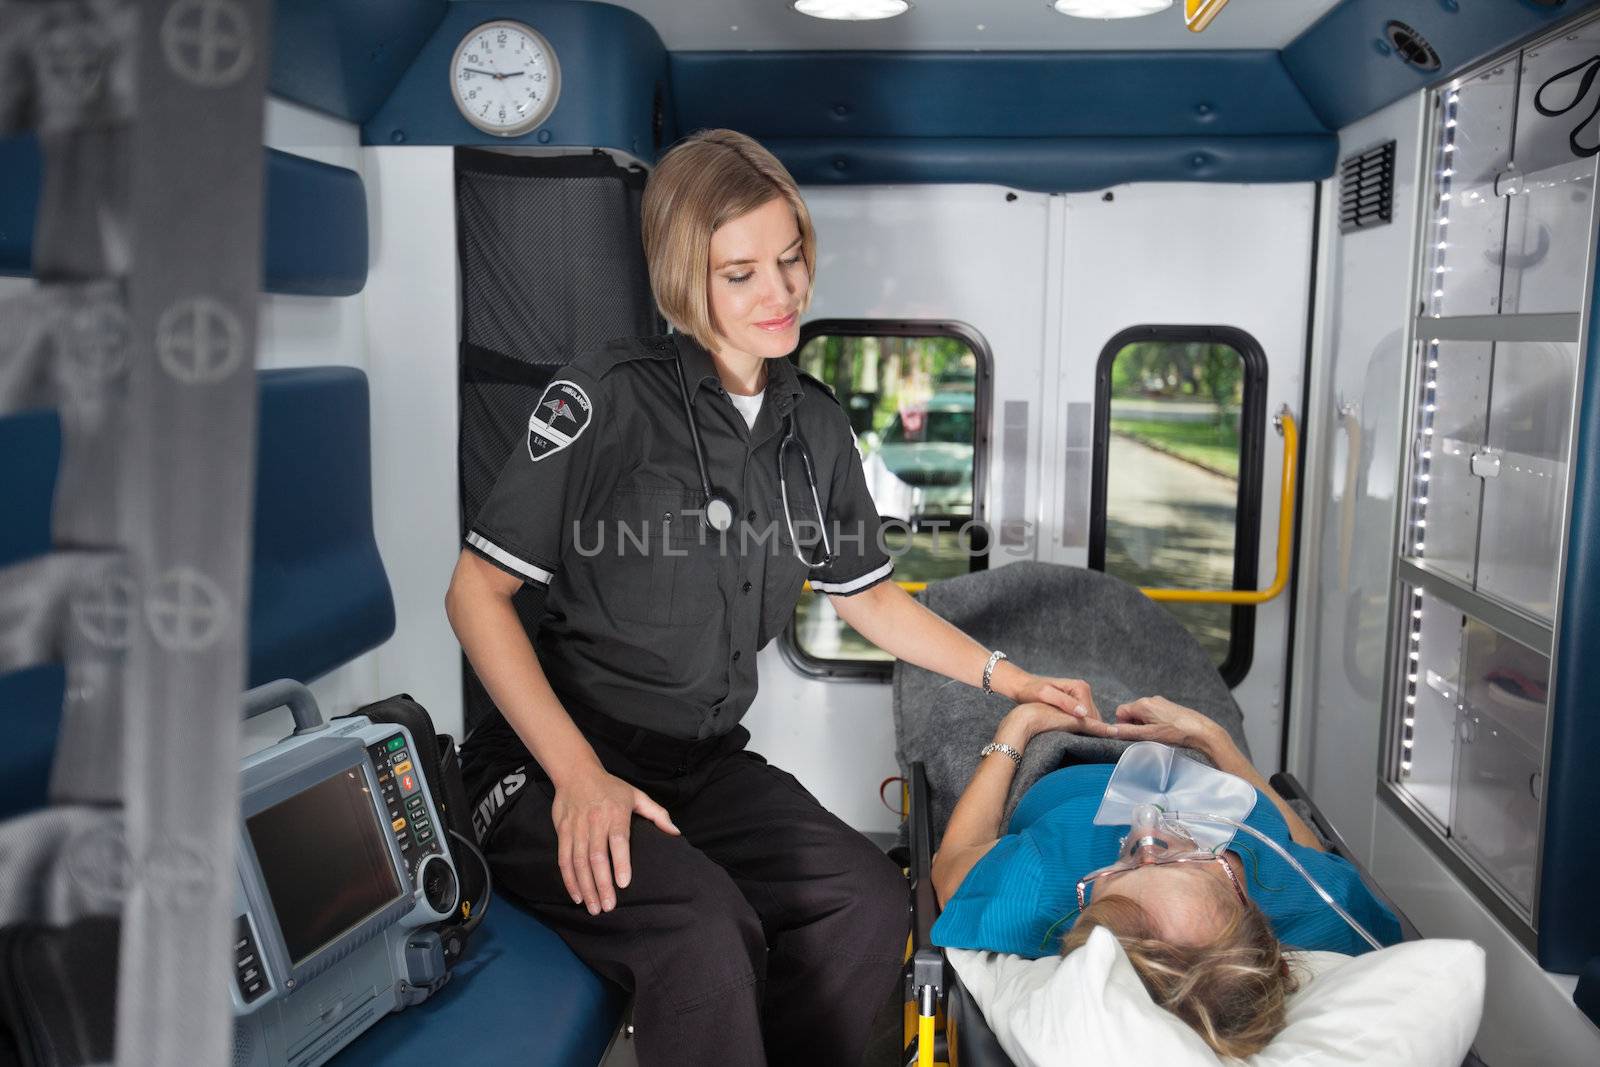 Senior Care in Ambulance by leaf